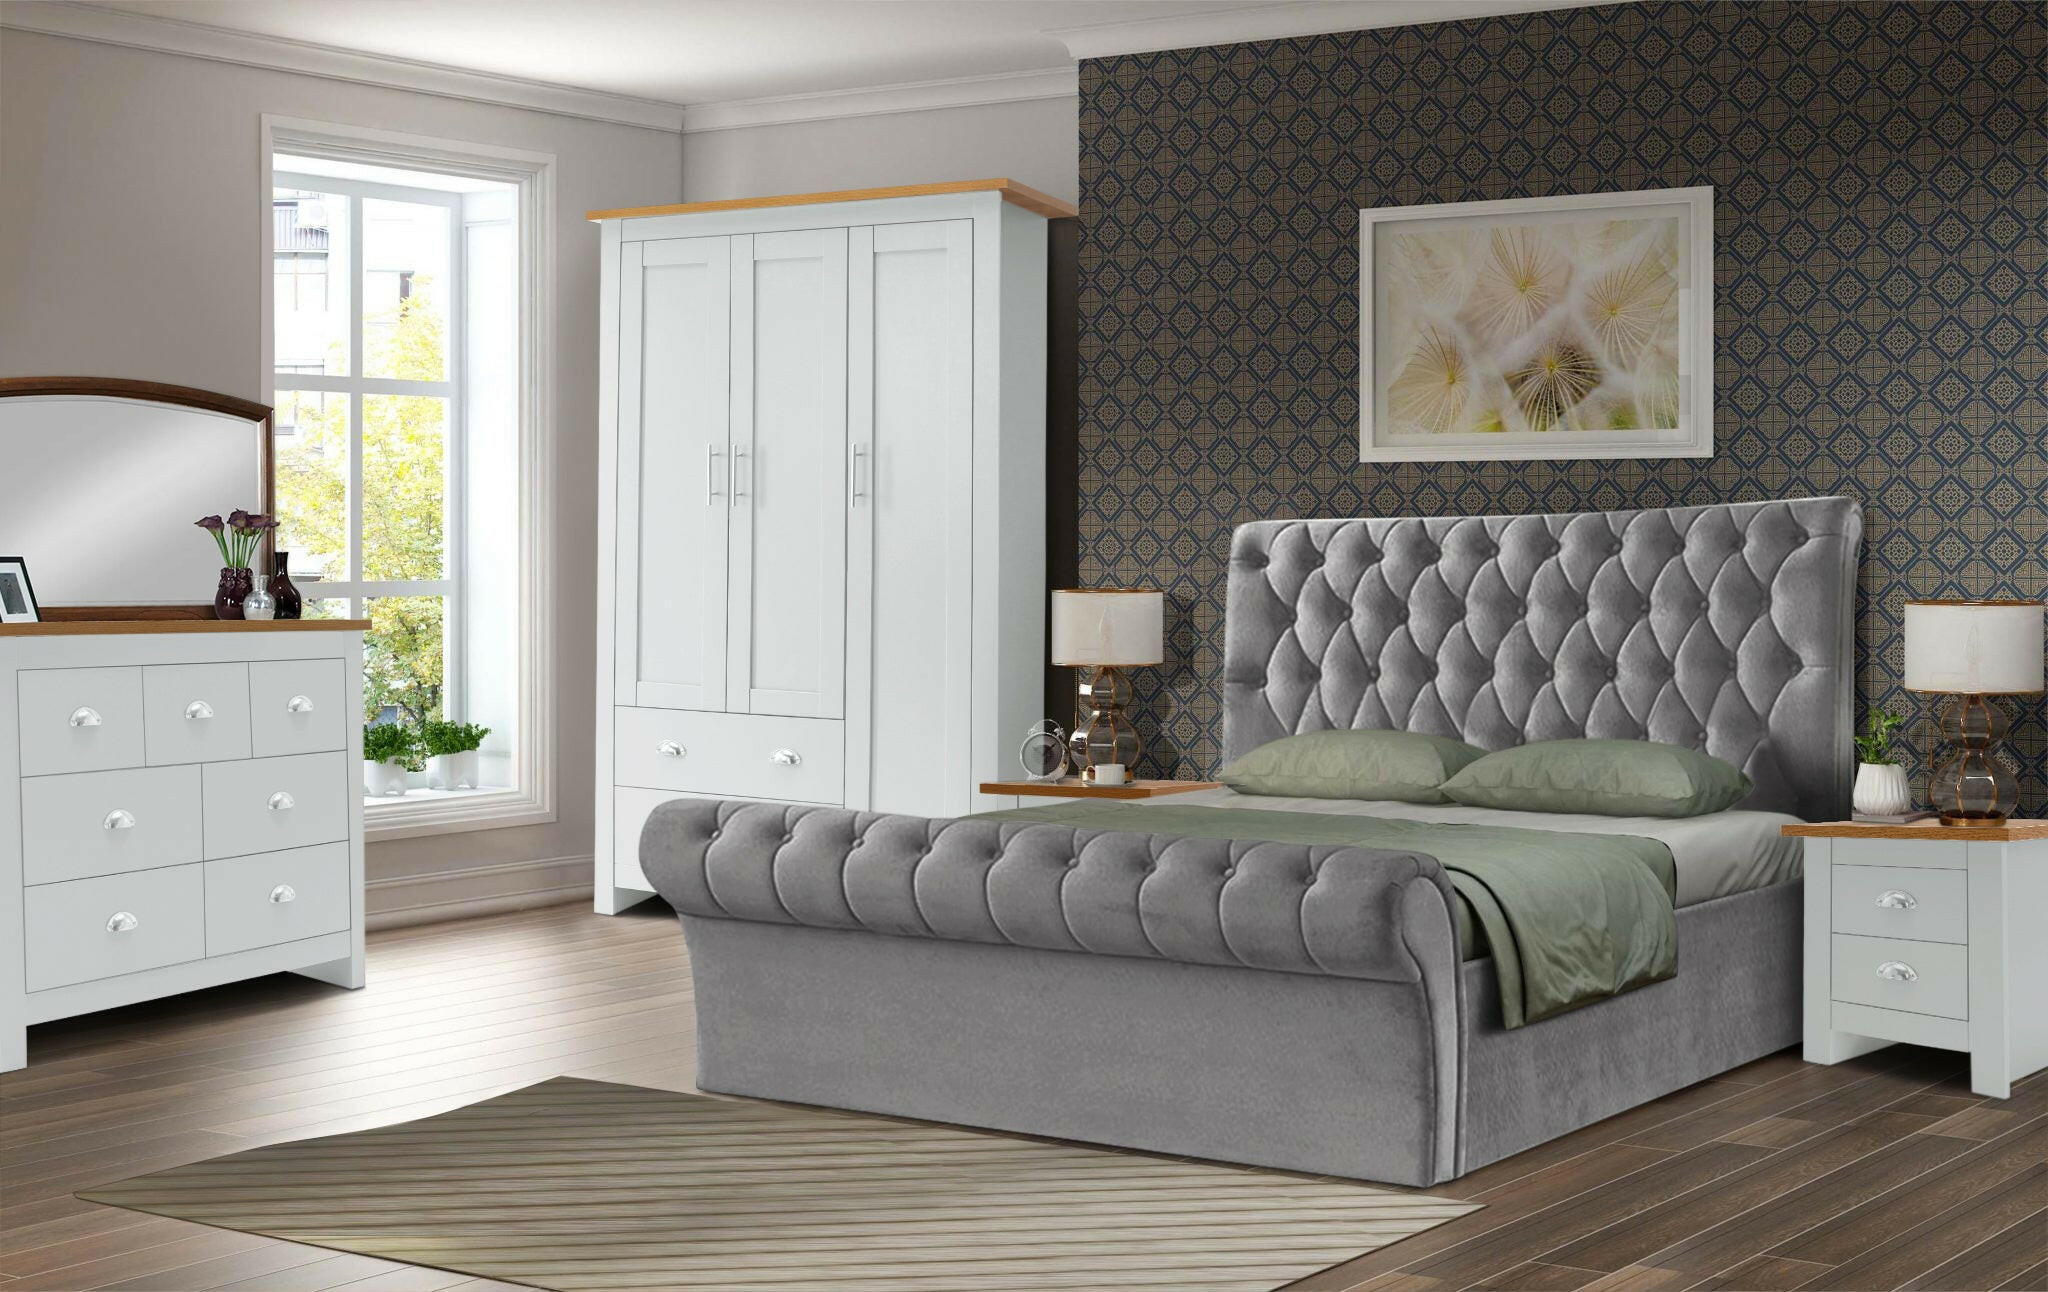 bedroom furniture sets with wardrobe